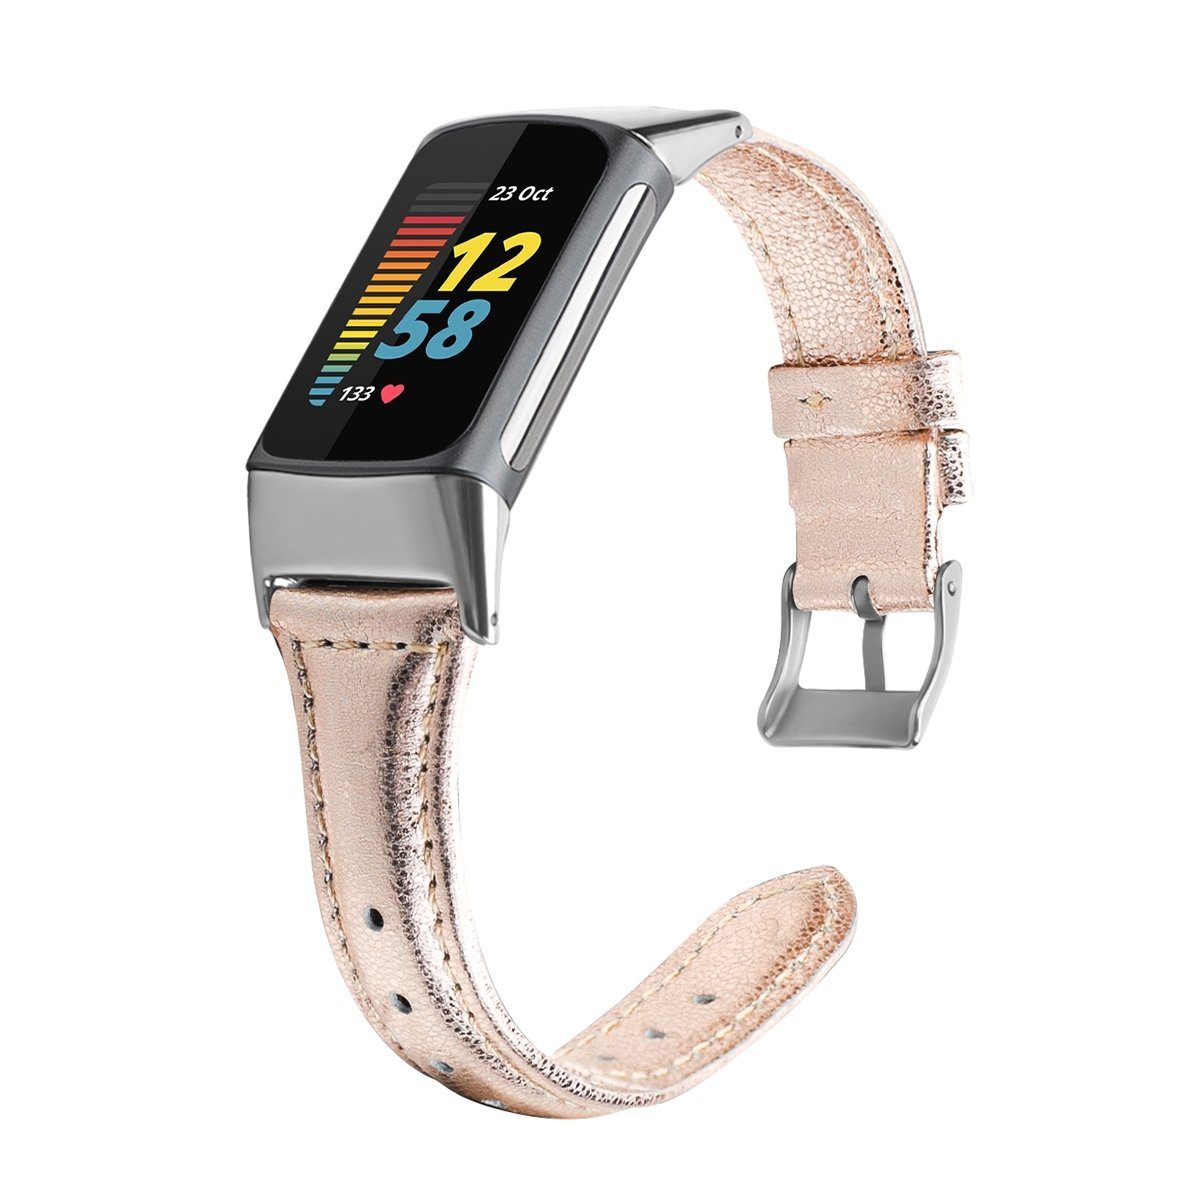 Fitbit Armbanduhren online OTTO kaufen 